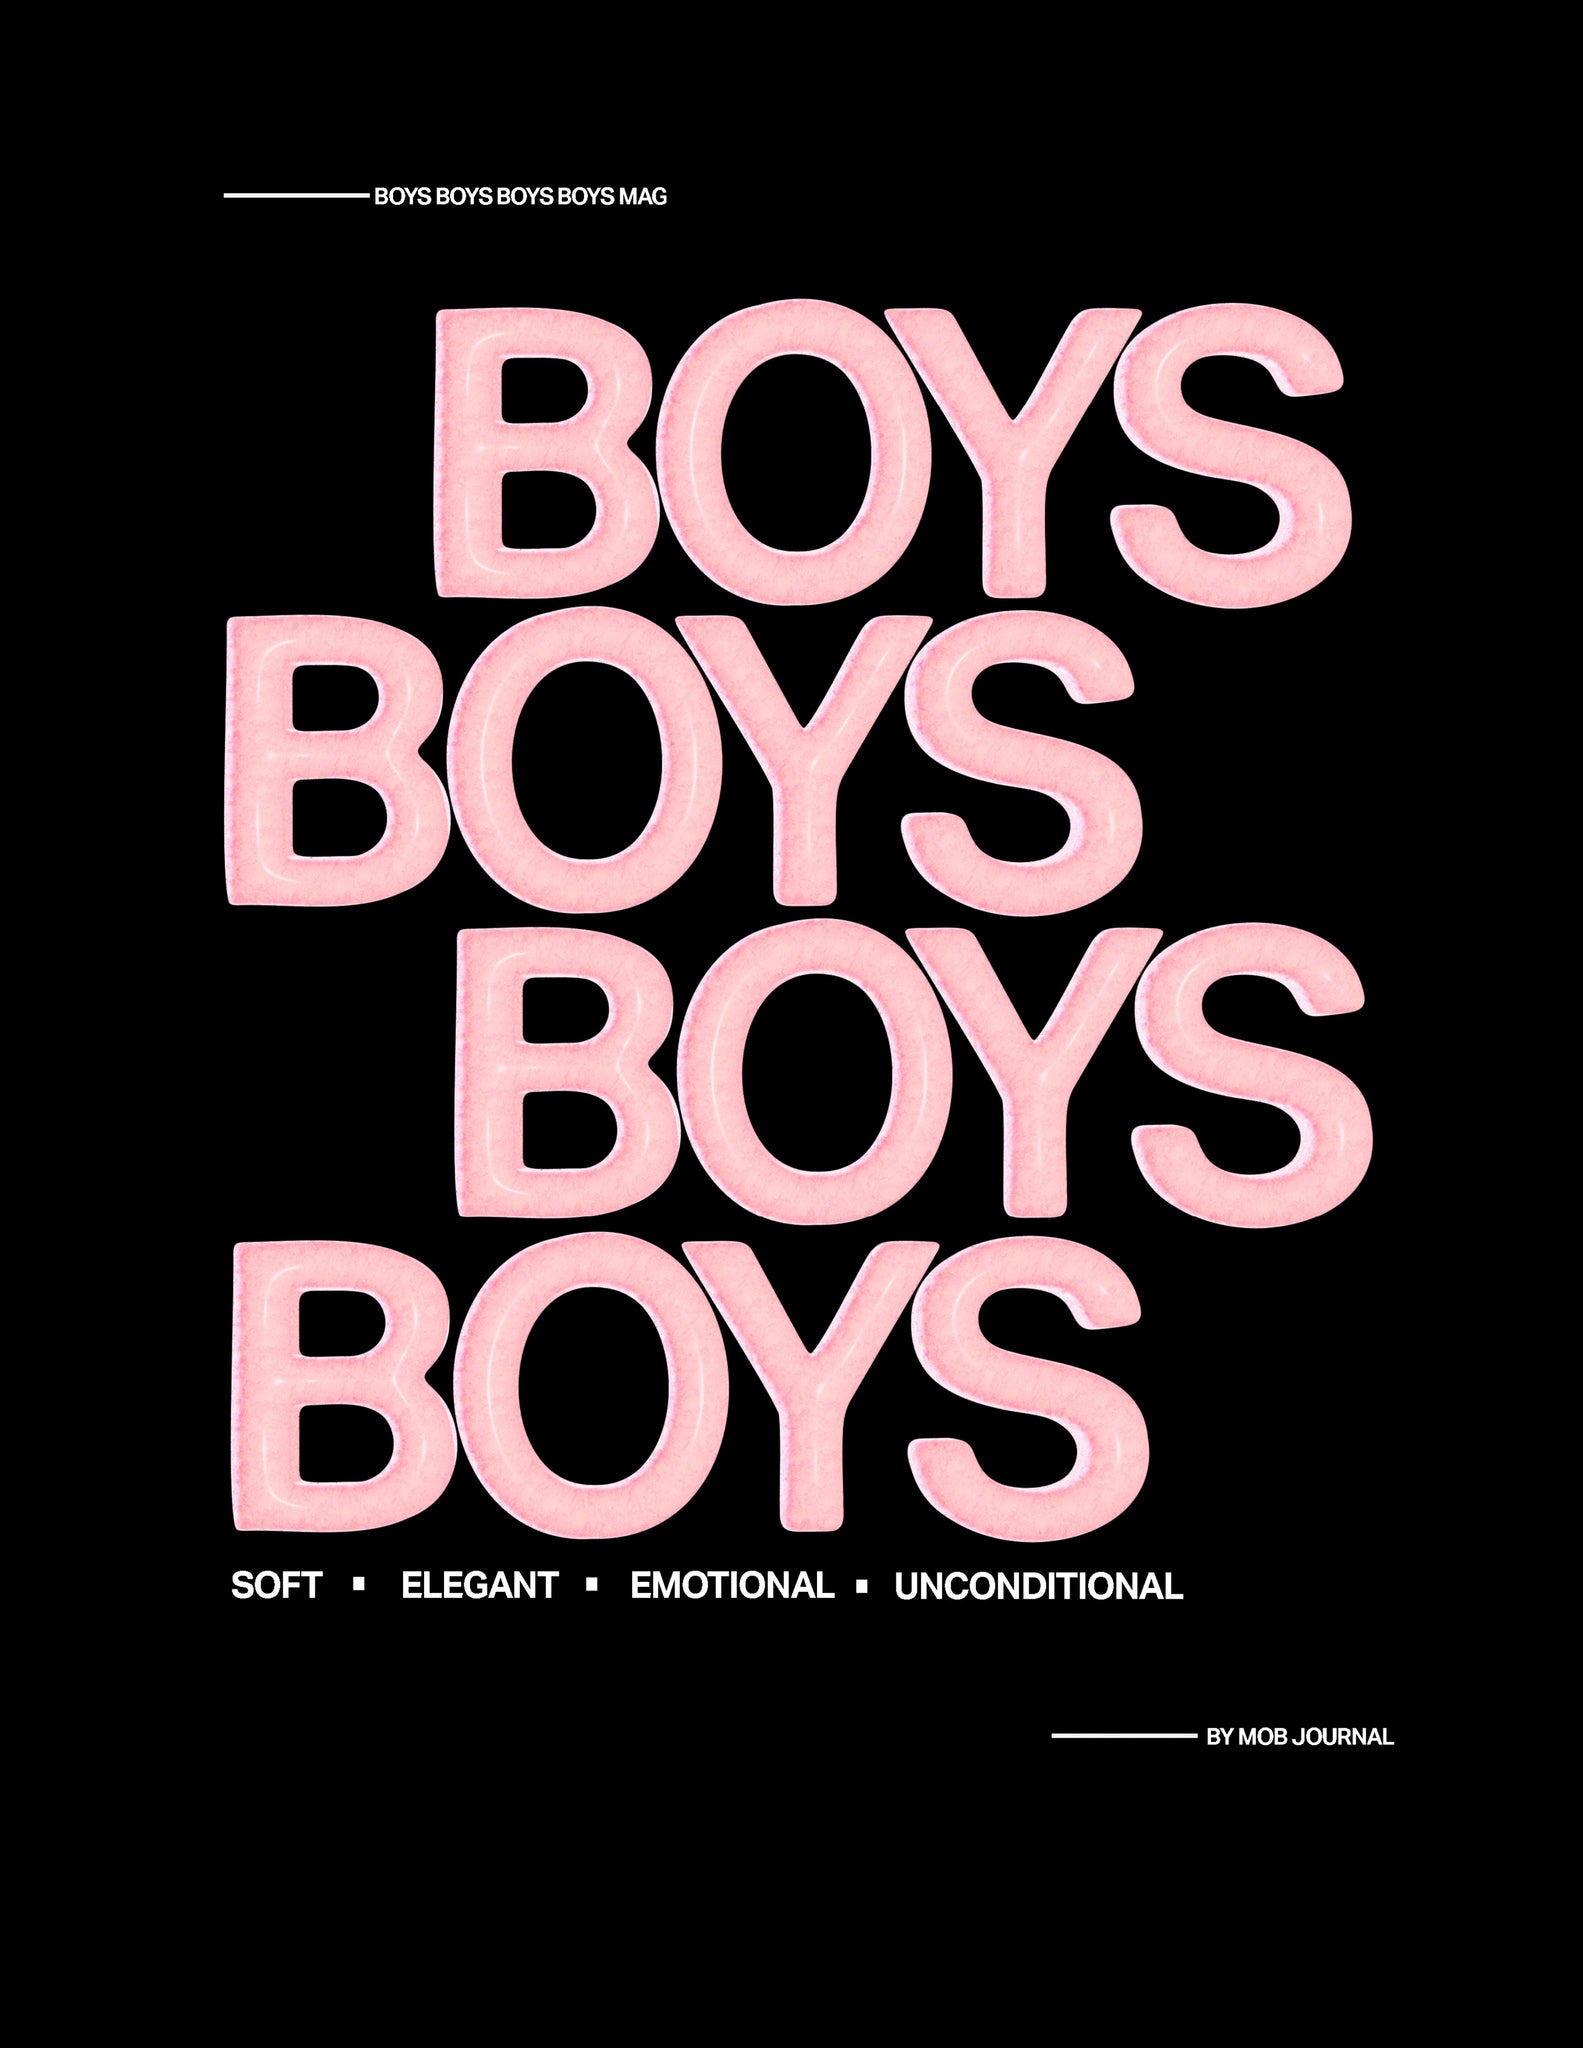 BOYS BOYS BOYS BOYS | VOLUME TWENTY FIVE | ISSUE #09